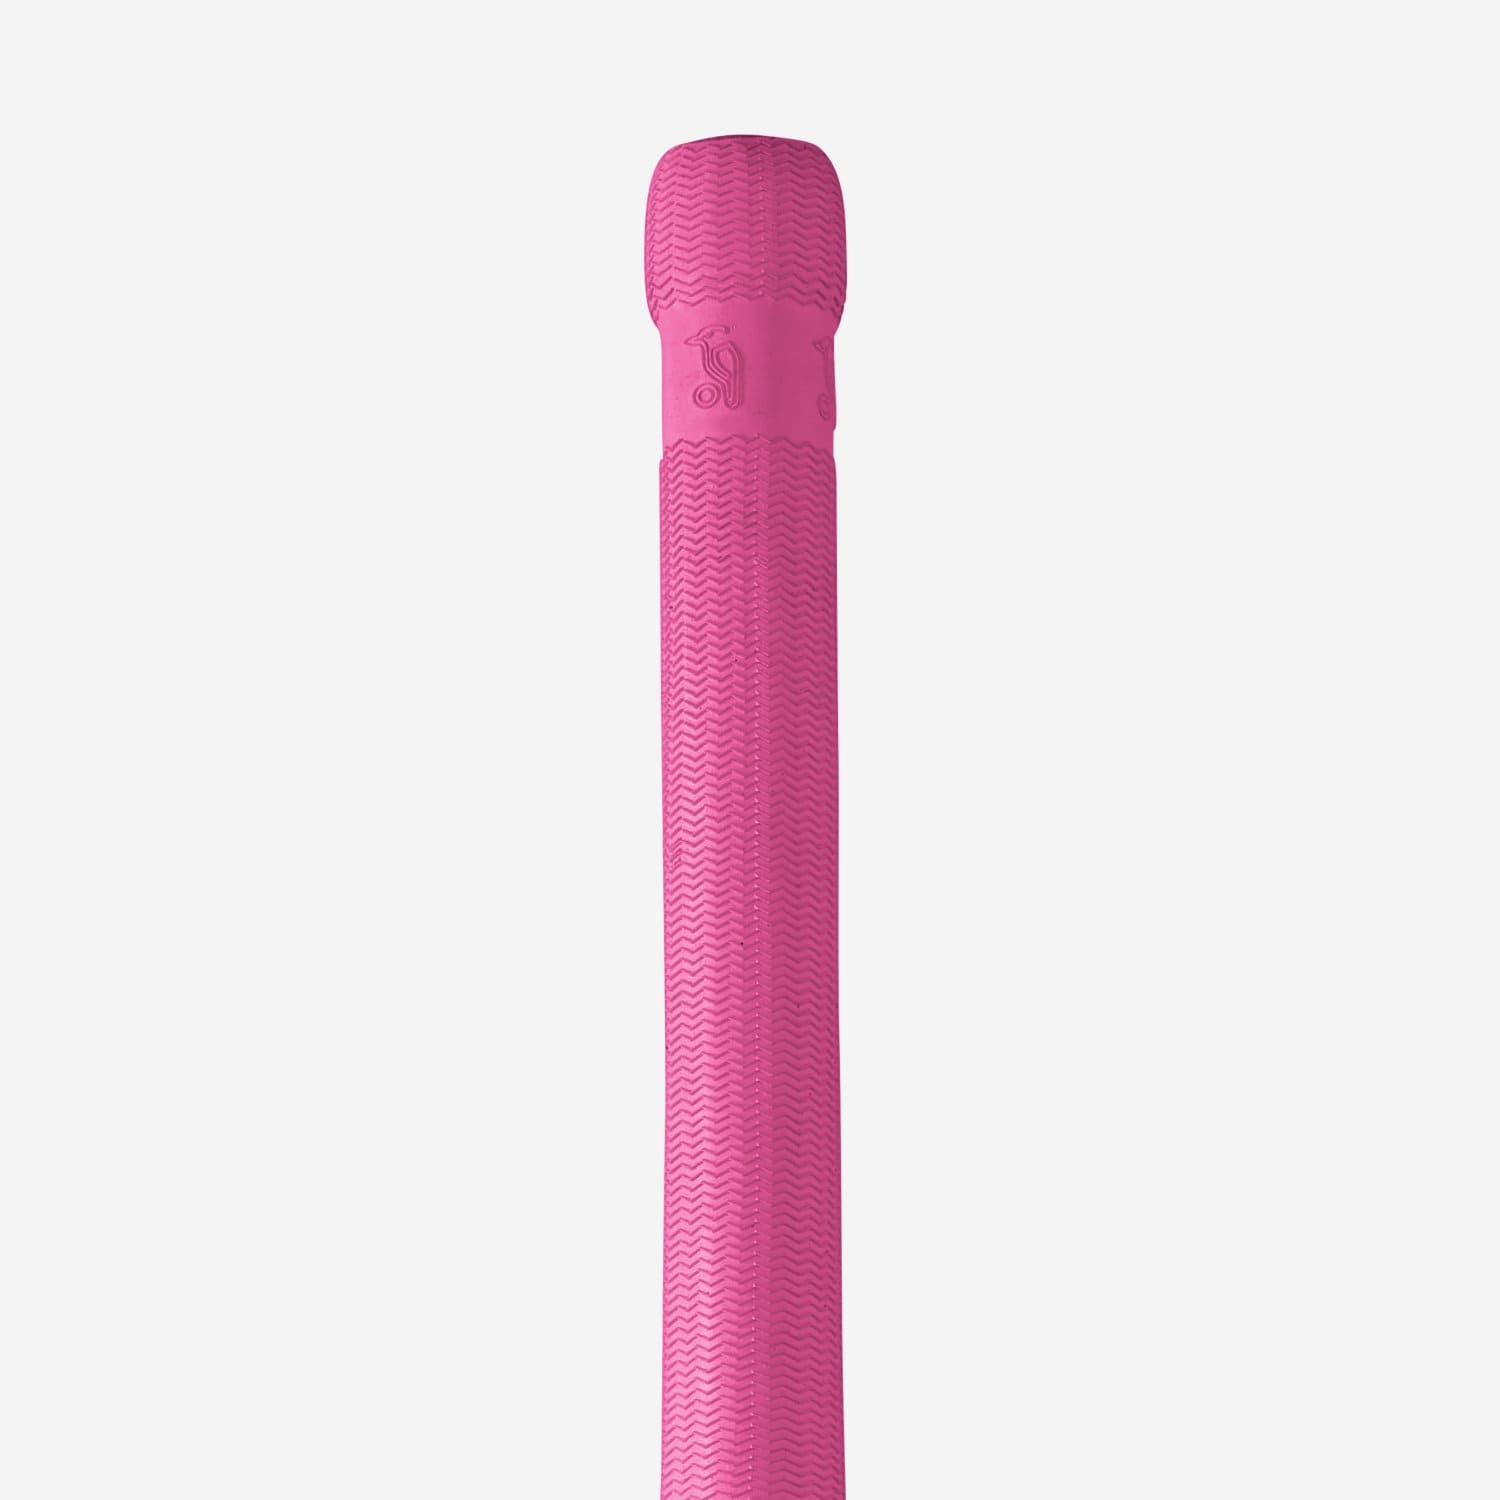 Kookaburra Accessories Pink Kookaburra Zig Zag Cricket Bat Grip